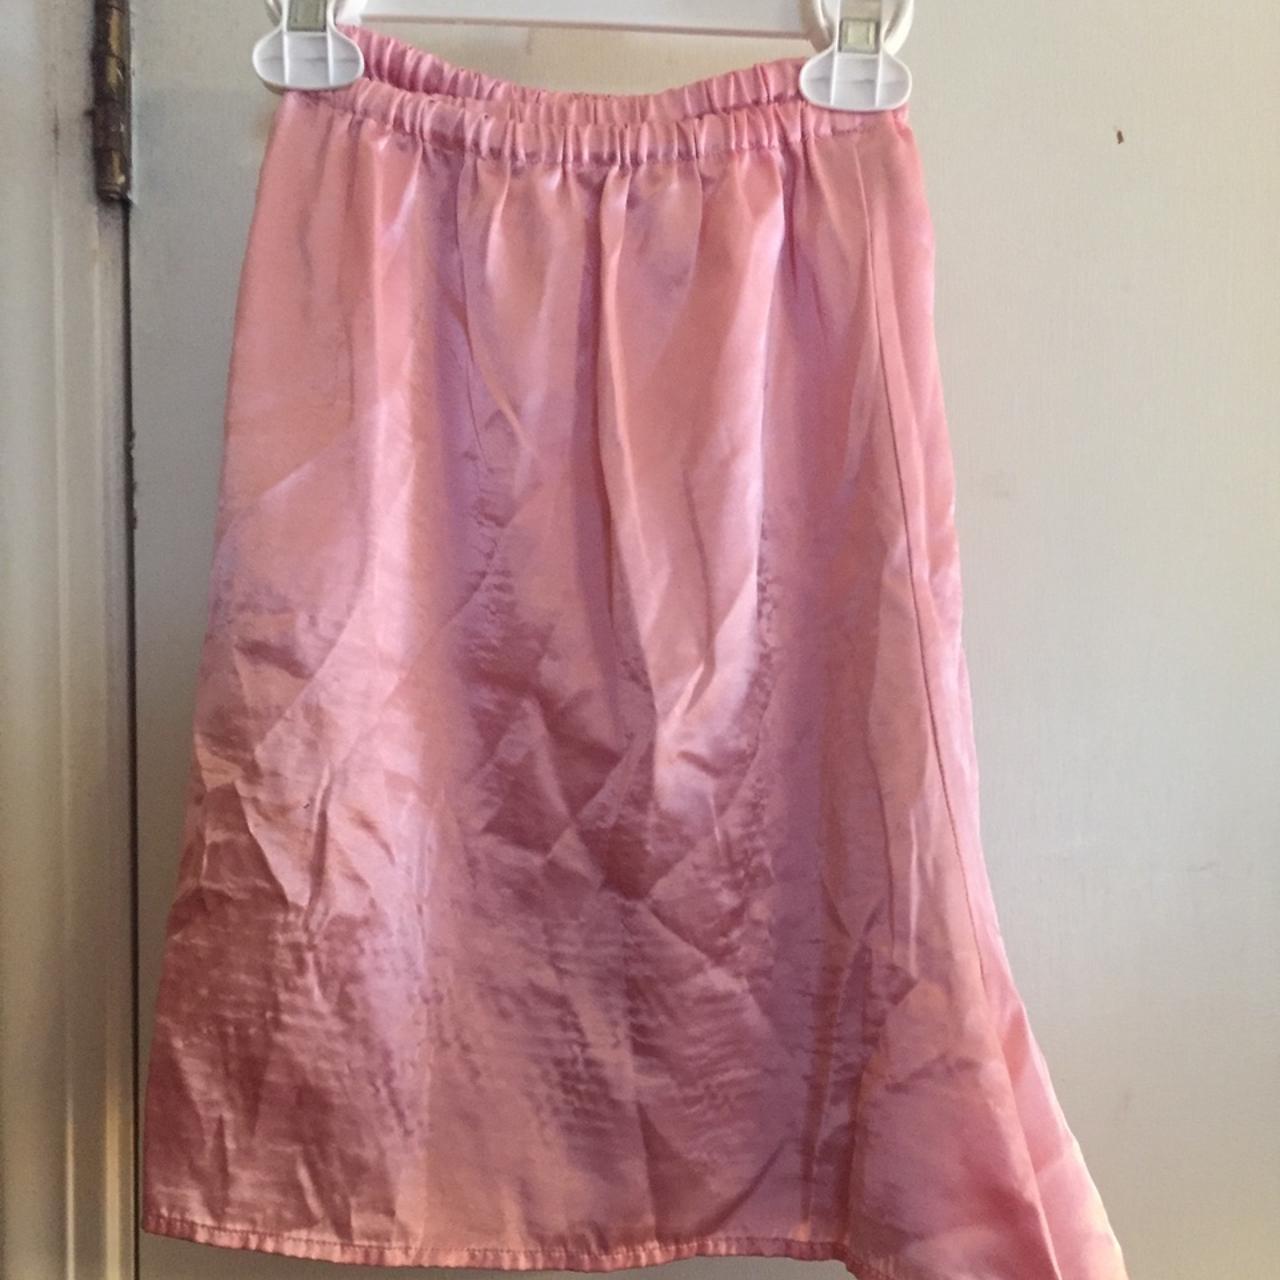 Product Image 2 - Intimate moods pink pajama set
lovely